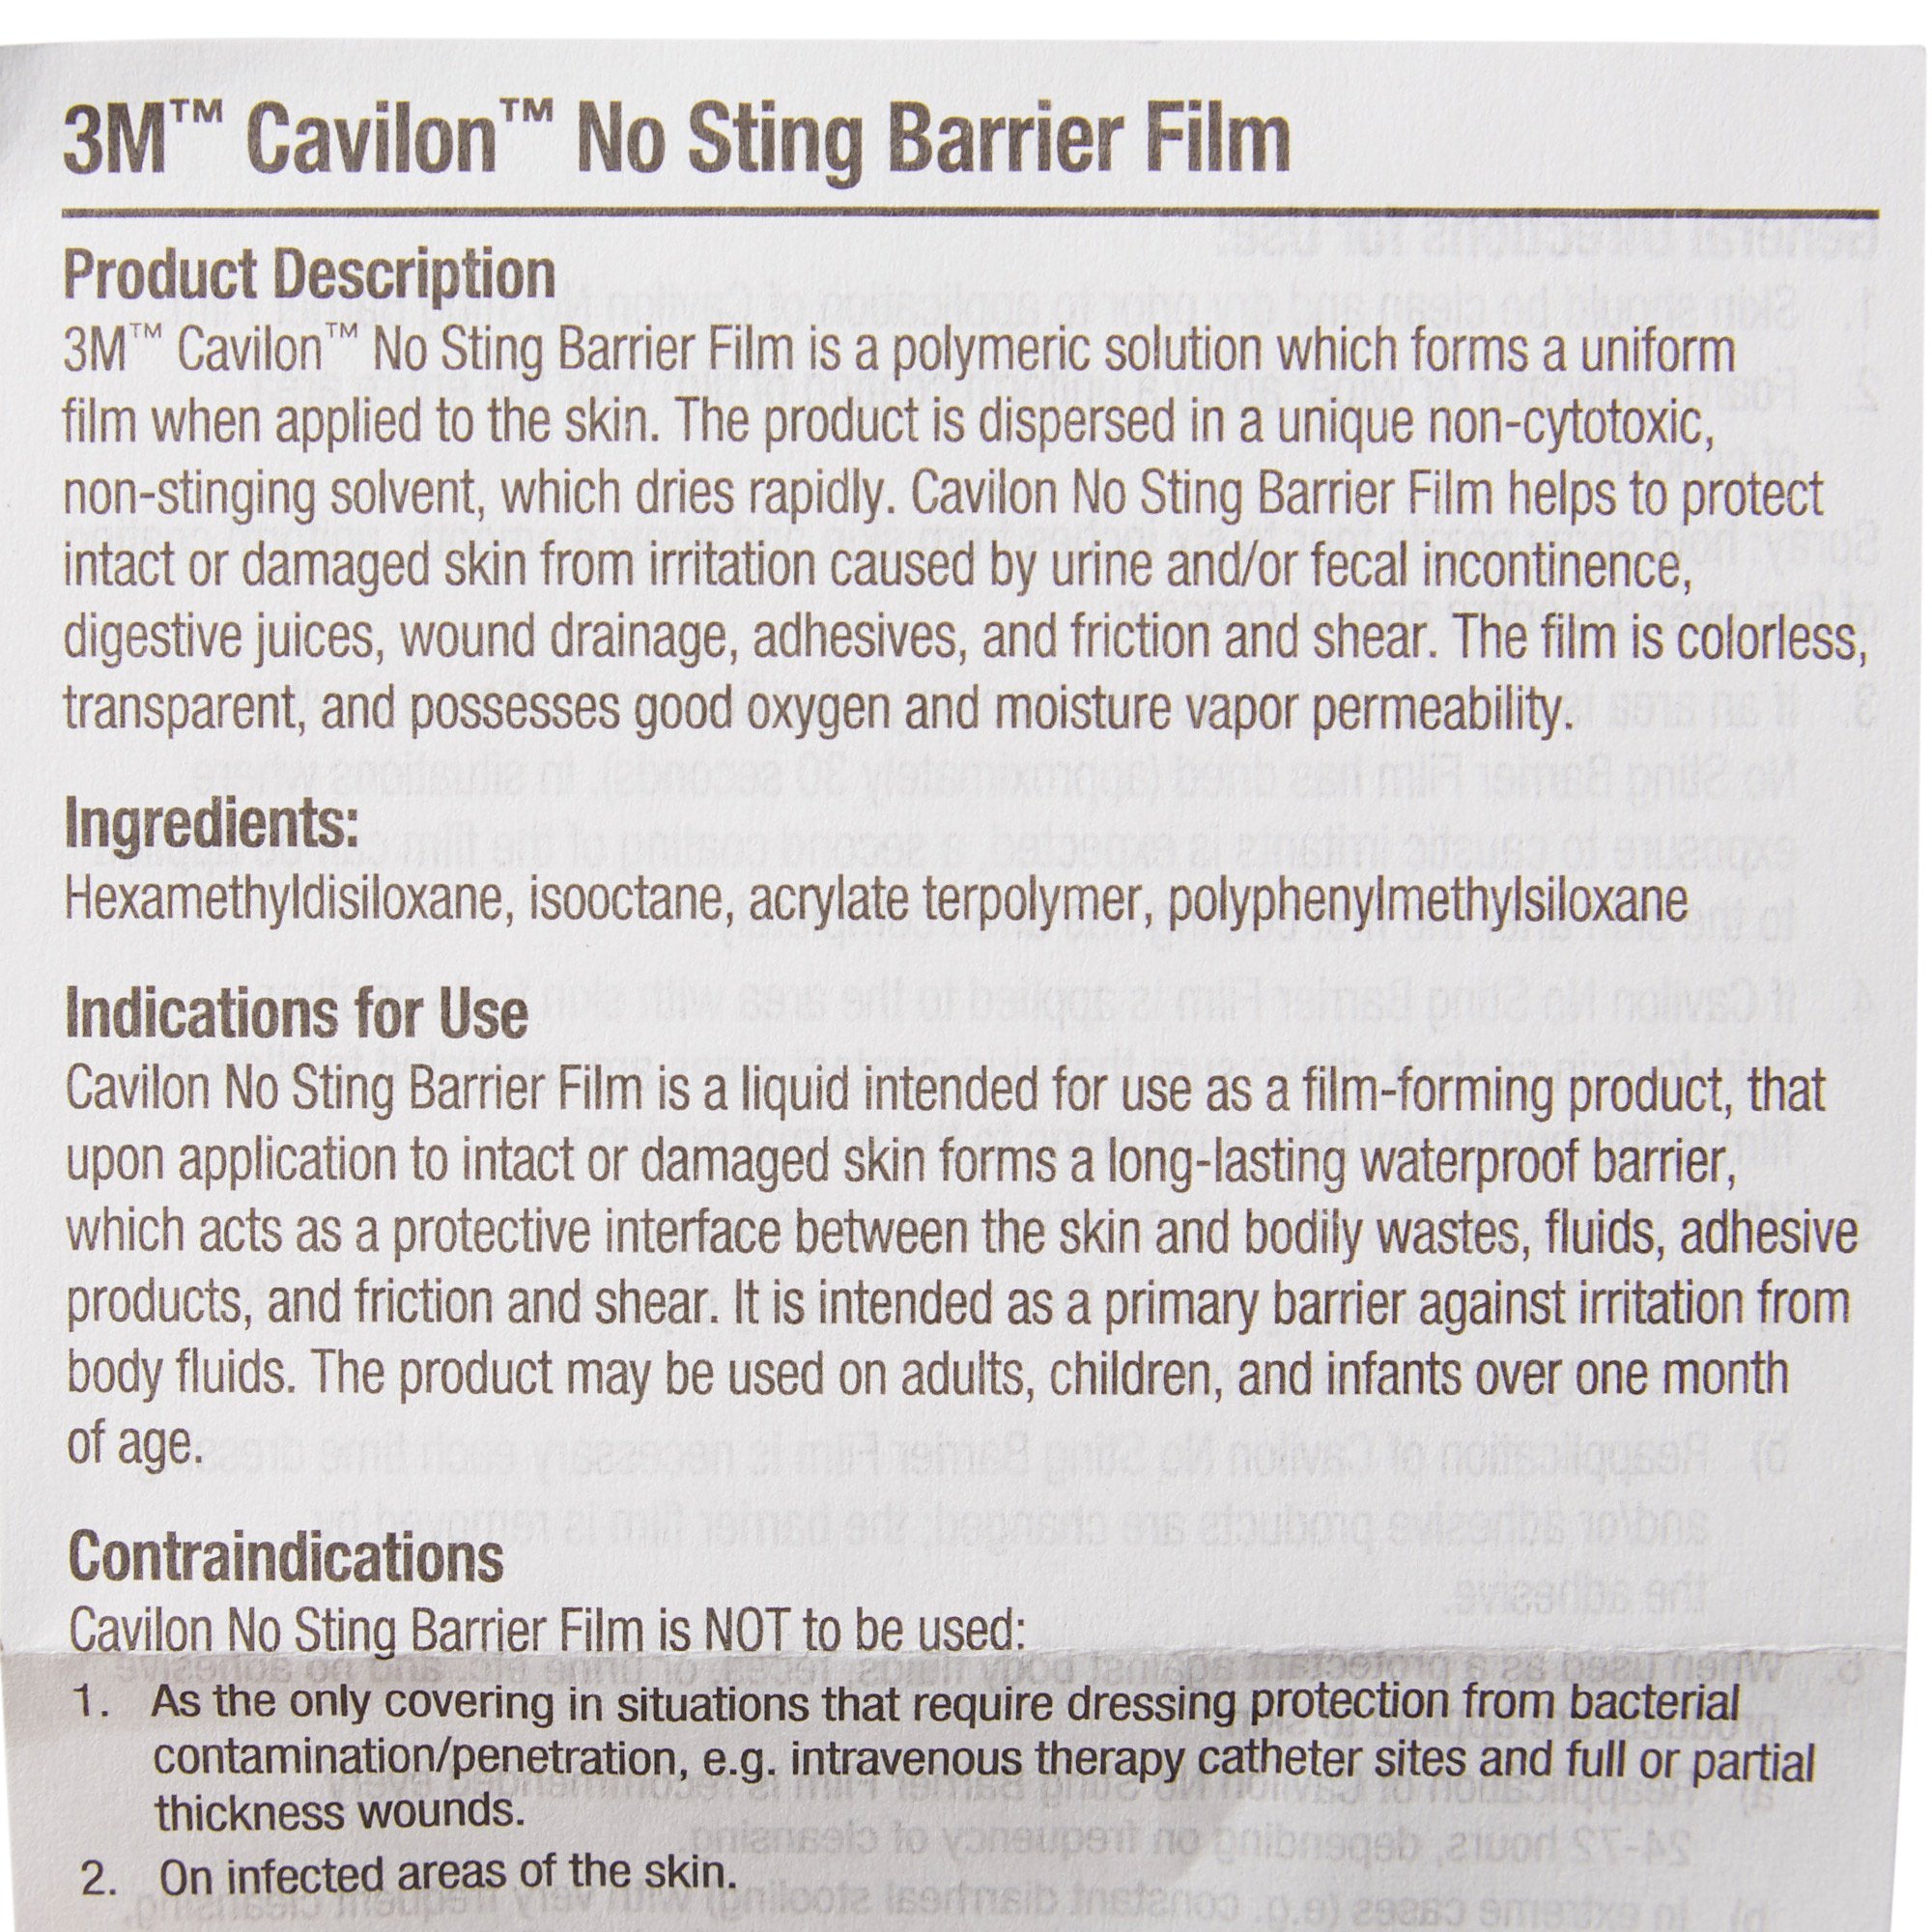 3M Cavilon No Sting Barrier Film